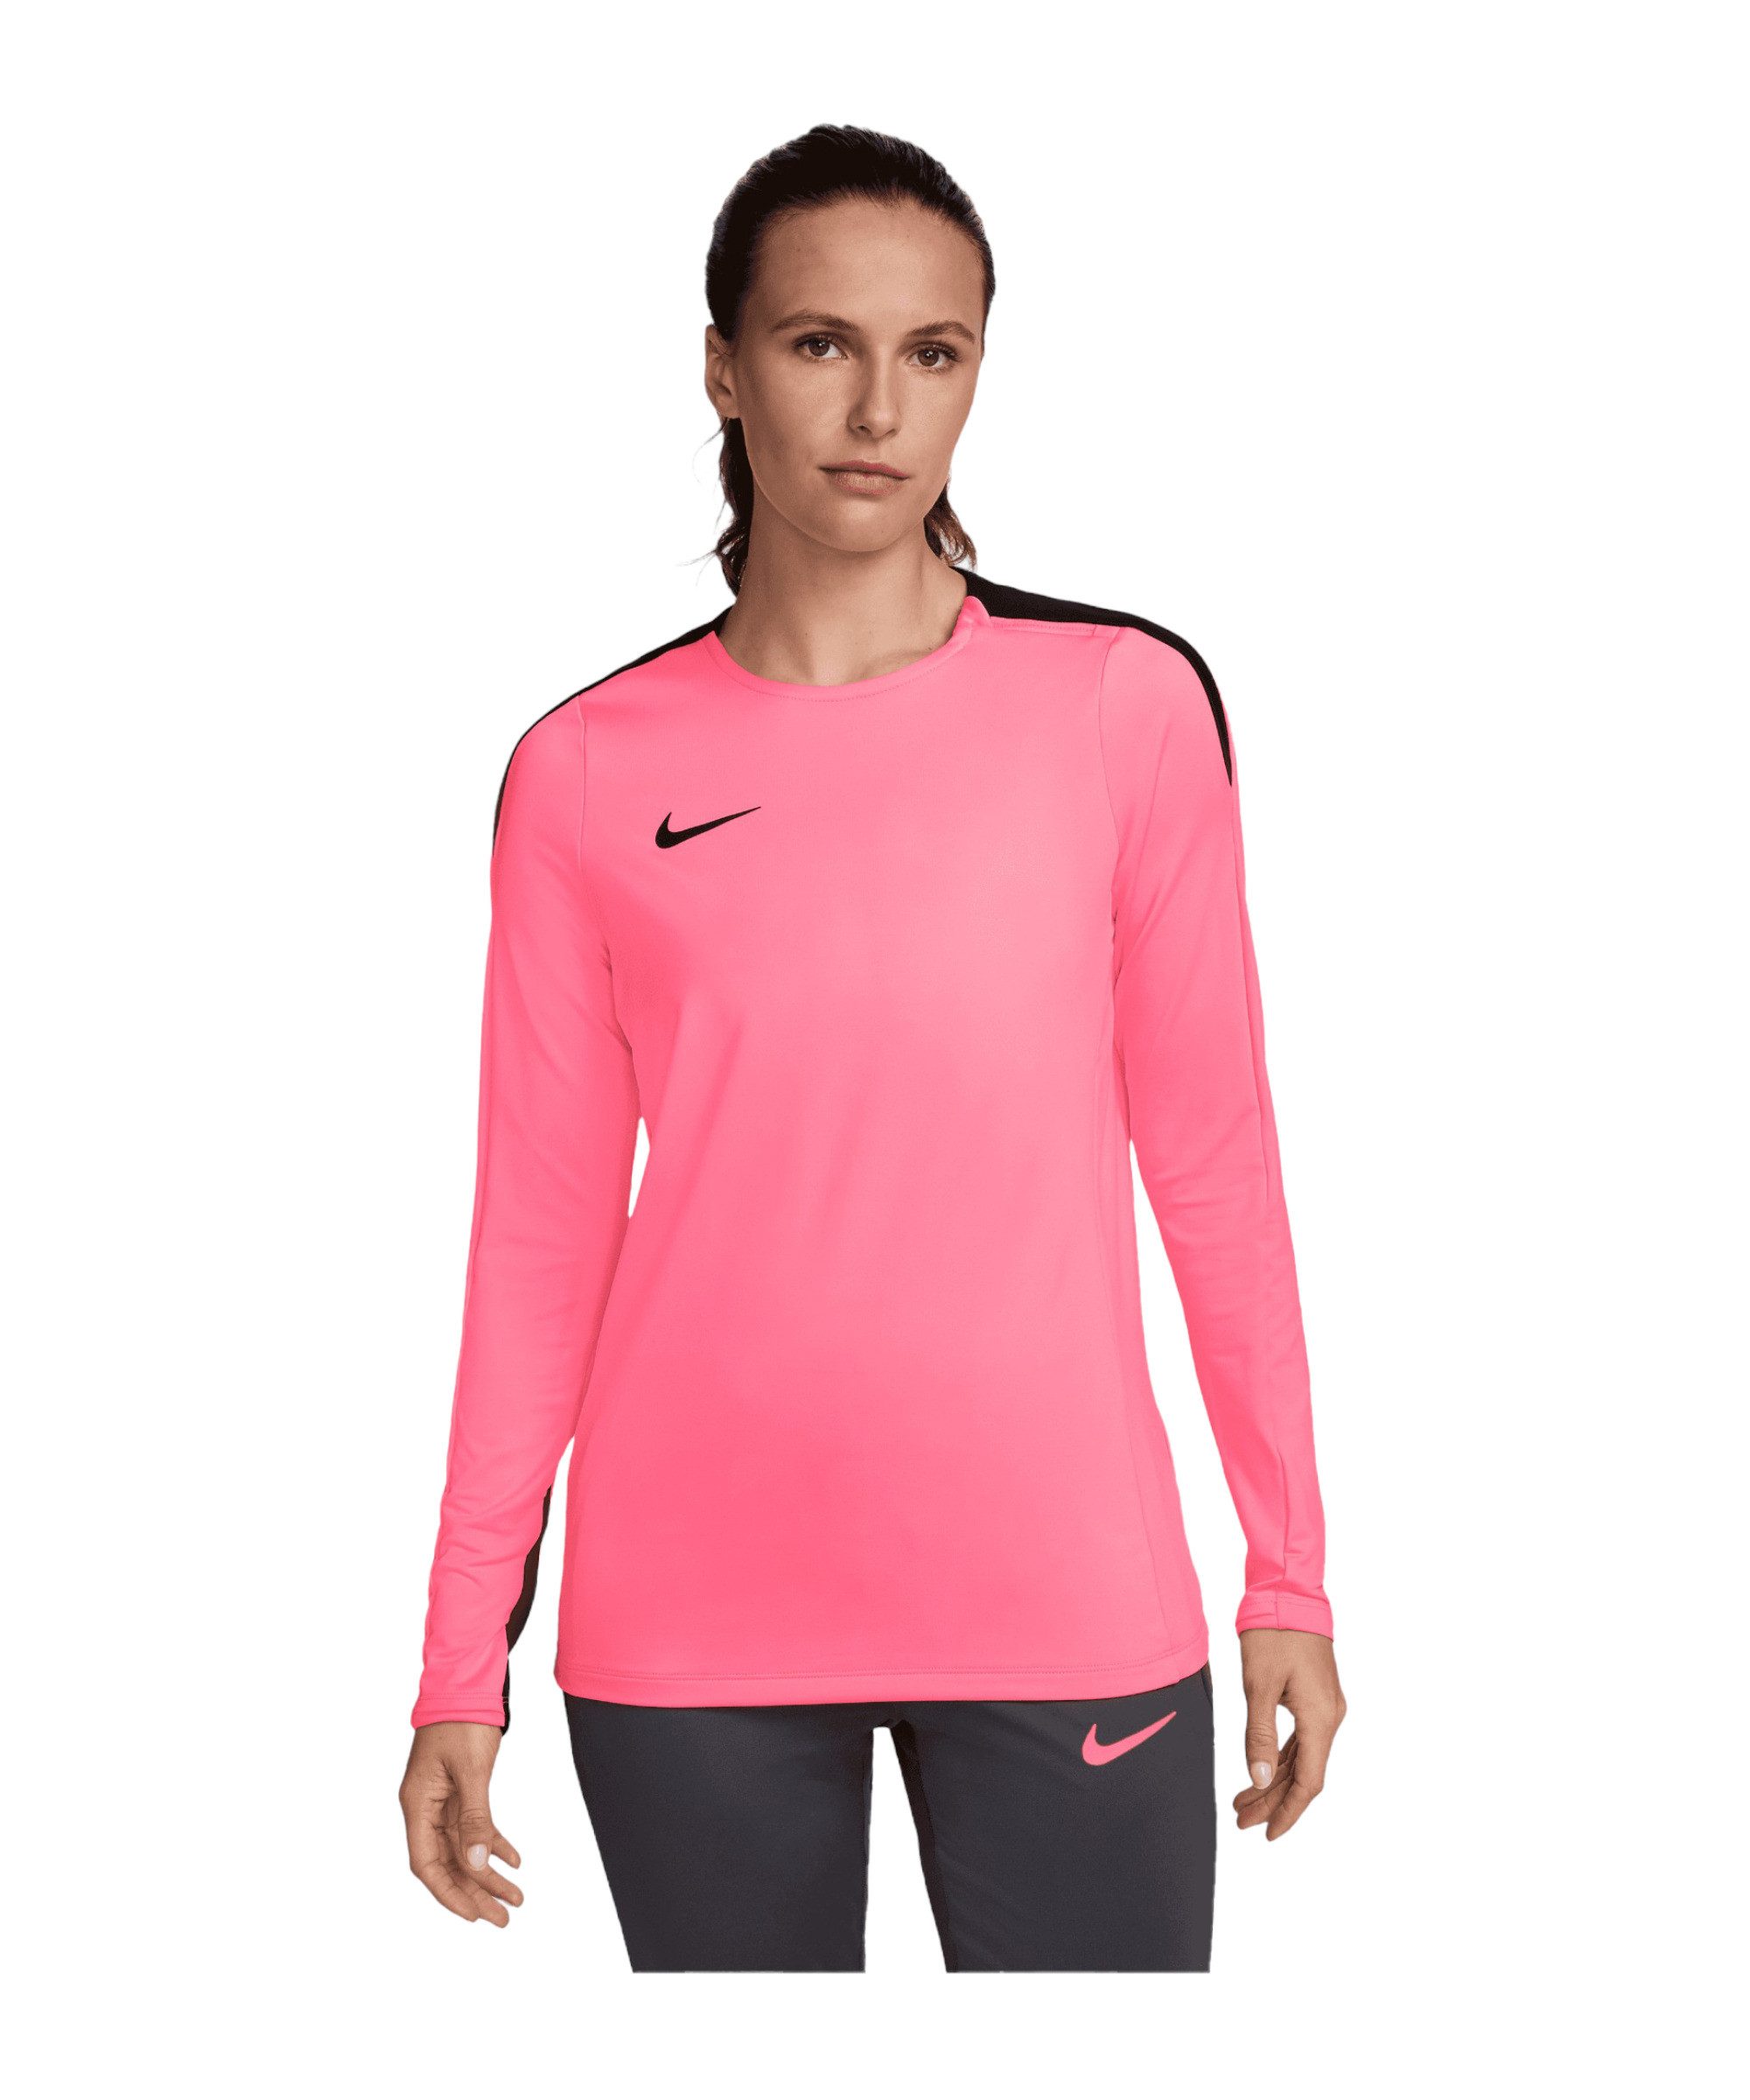 Nike T-Shirt Strike Crew Neck Trainingsshirt Damen default